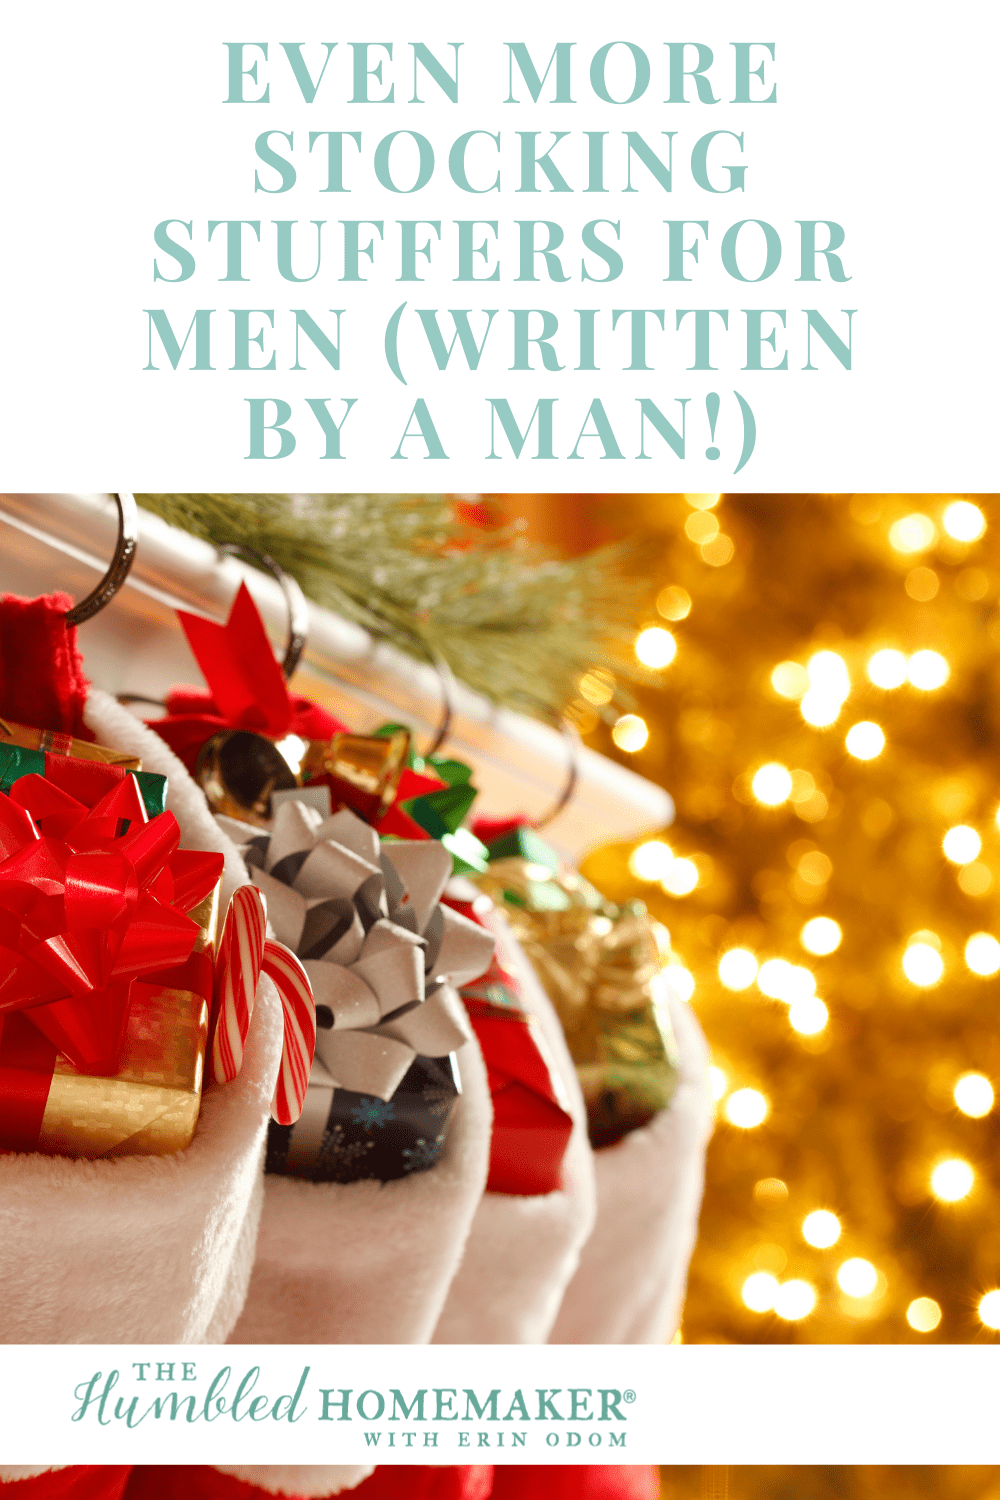 https://thehumbledhomemaker.com/wp-content/uploads/stocking-stuffers-for-men-3.webp